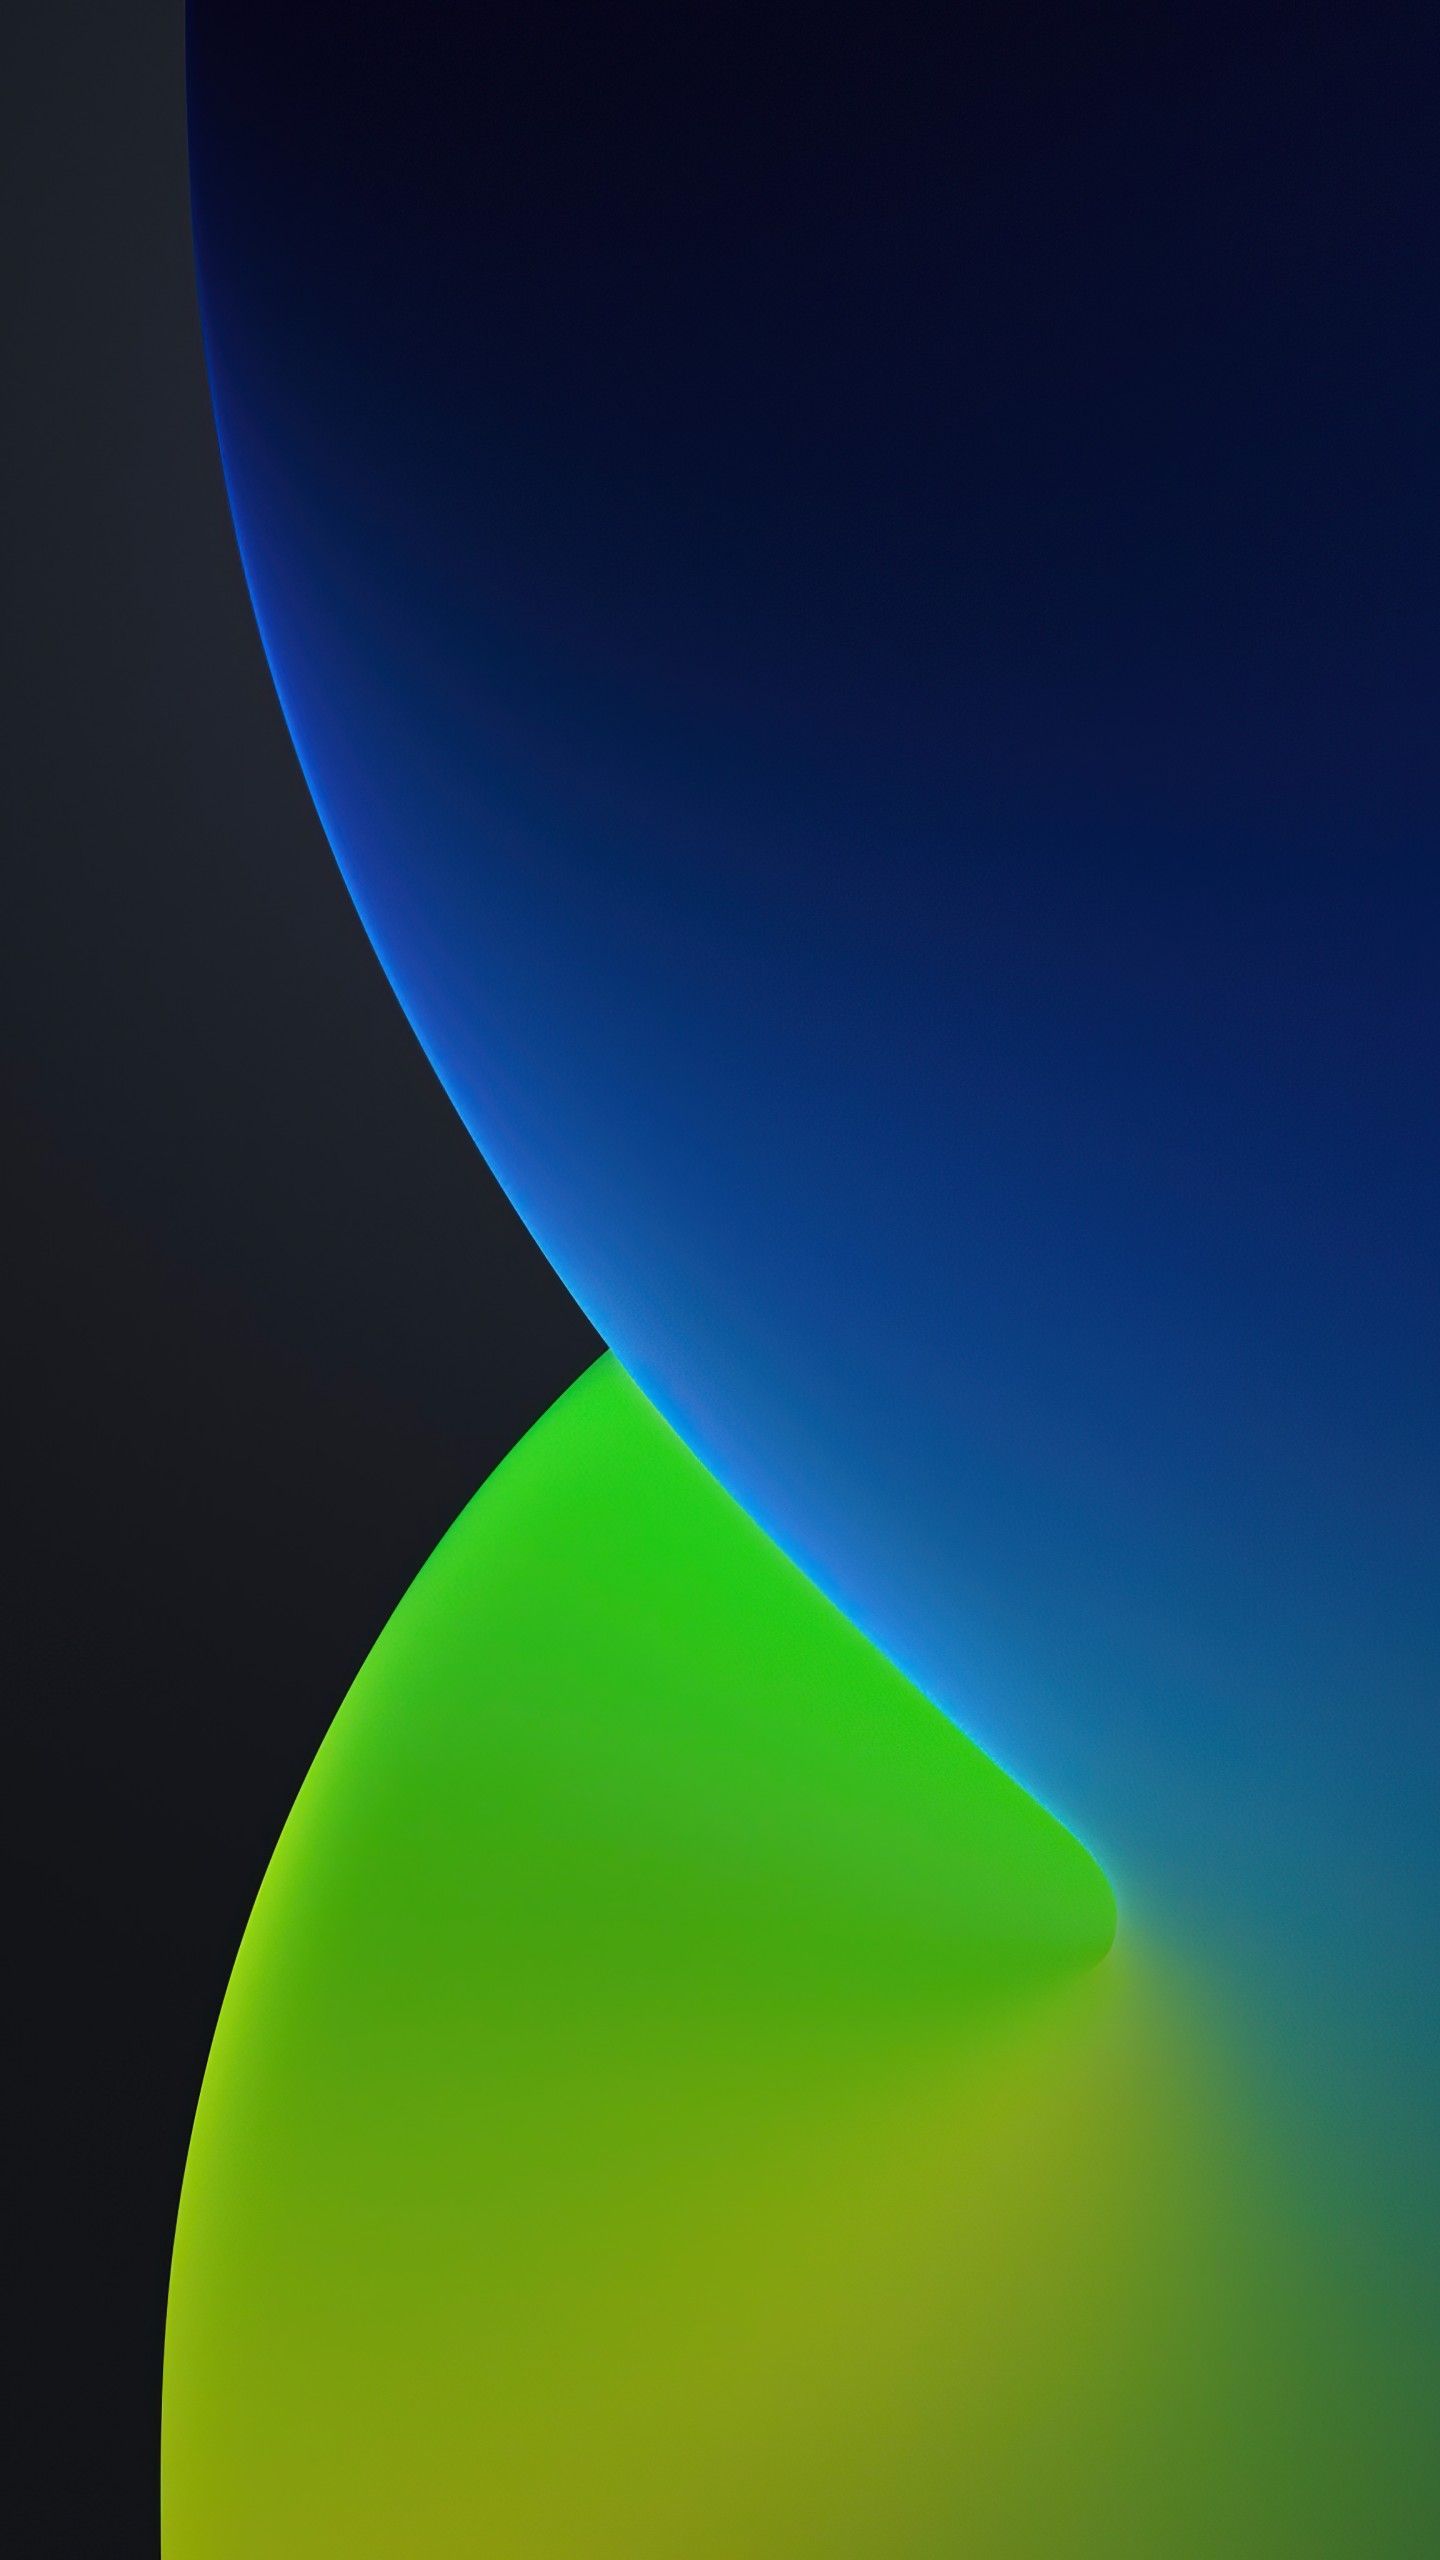 iOS 14 4K Wallpaper, WWDC, iPhone iPadOS, Dark, Green, Blue, Stock, Gradients